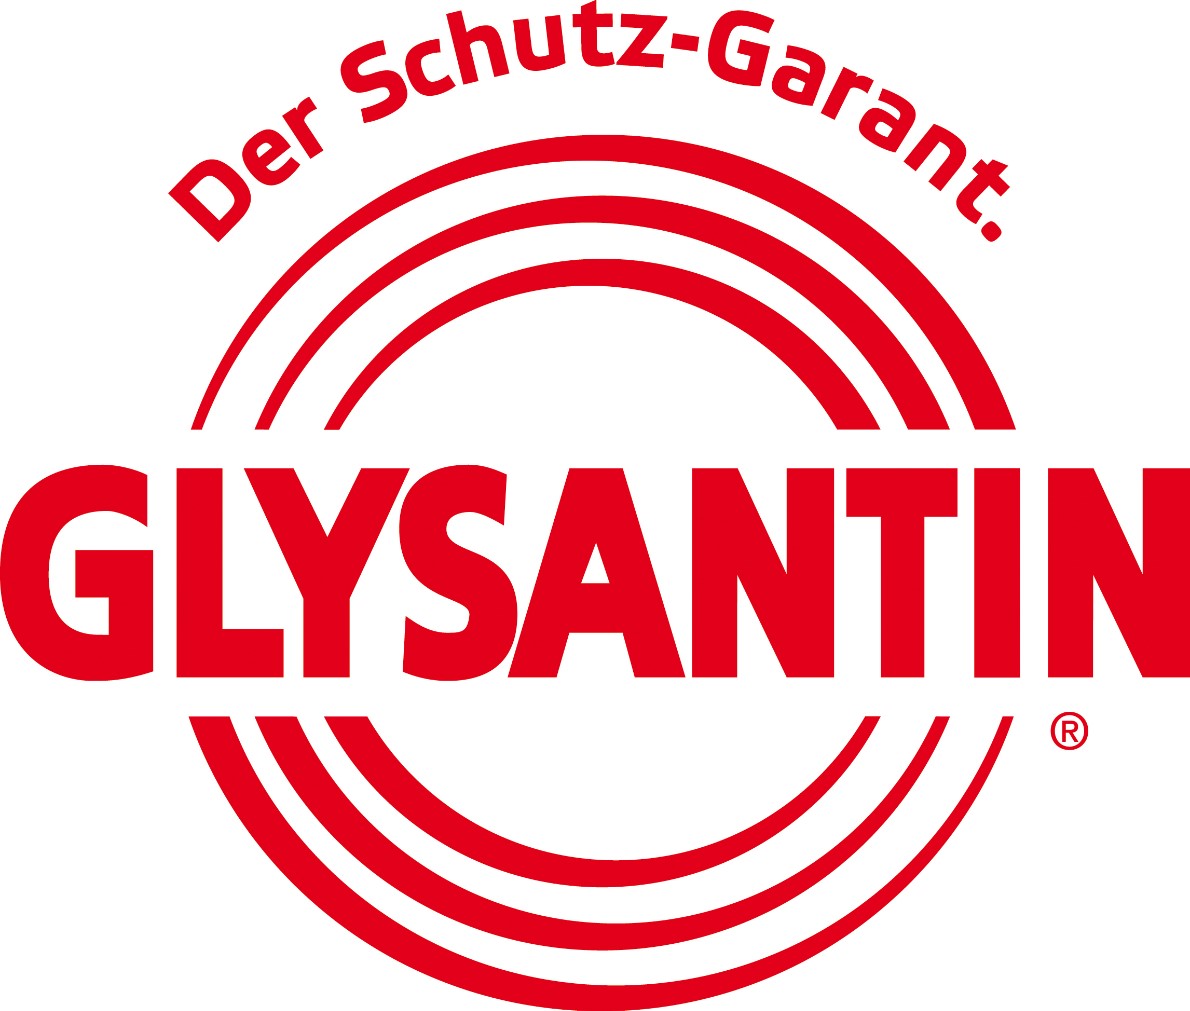 GLYSANTIN_logo.jpg